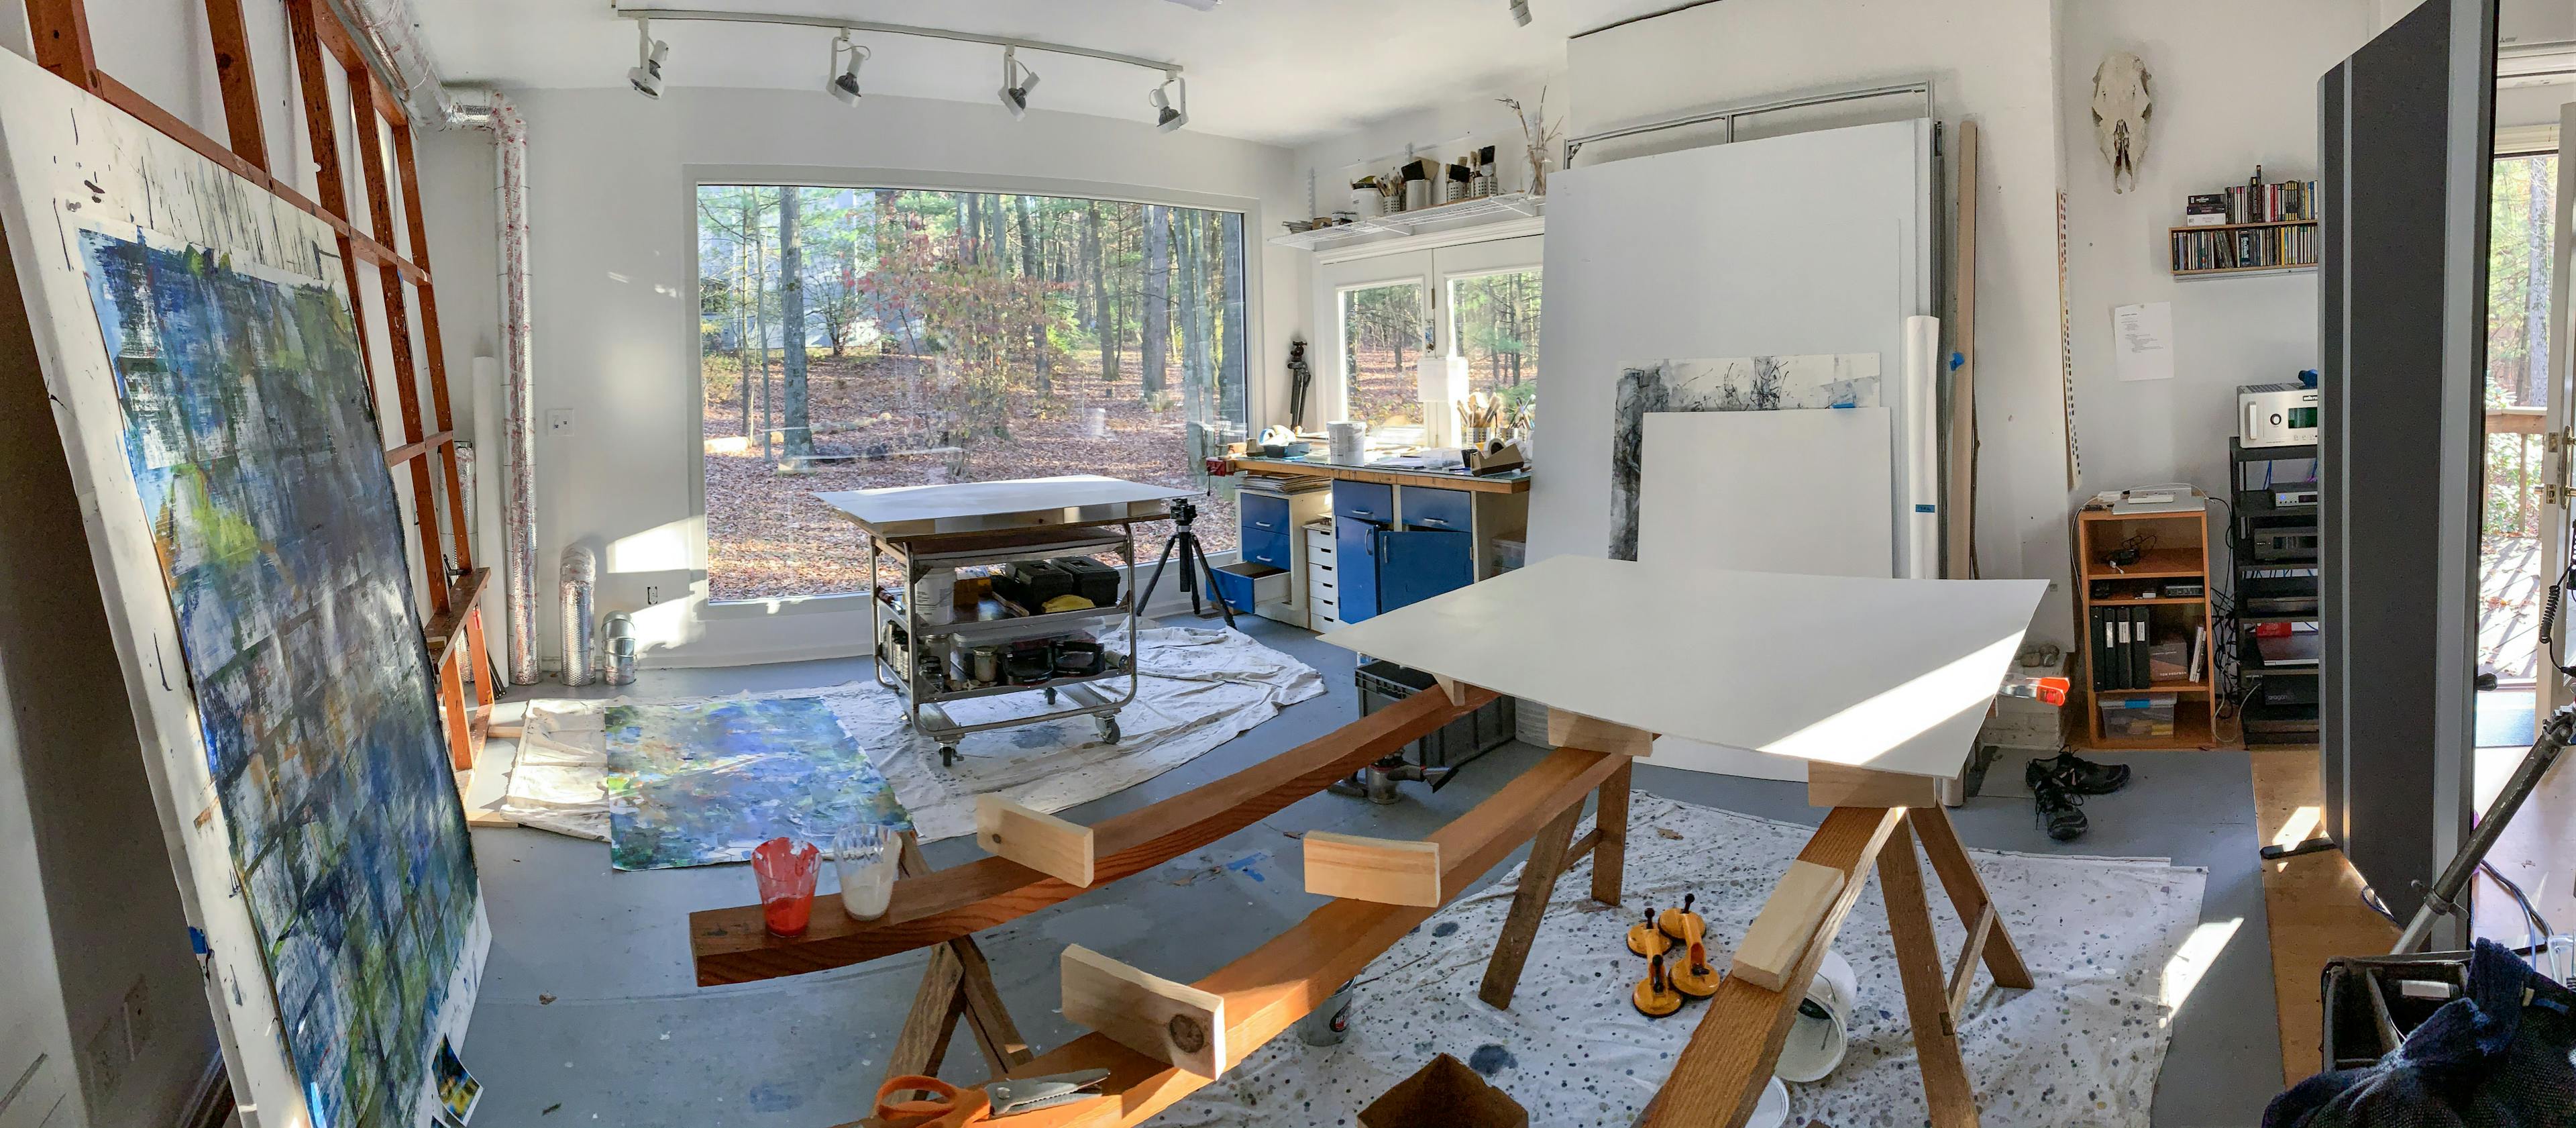 Panorama of Christopher's studio